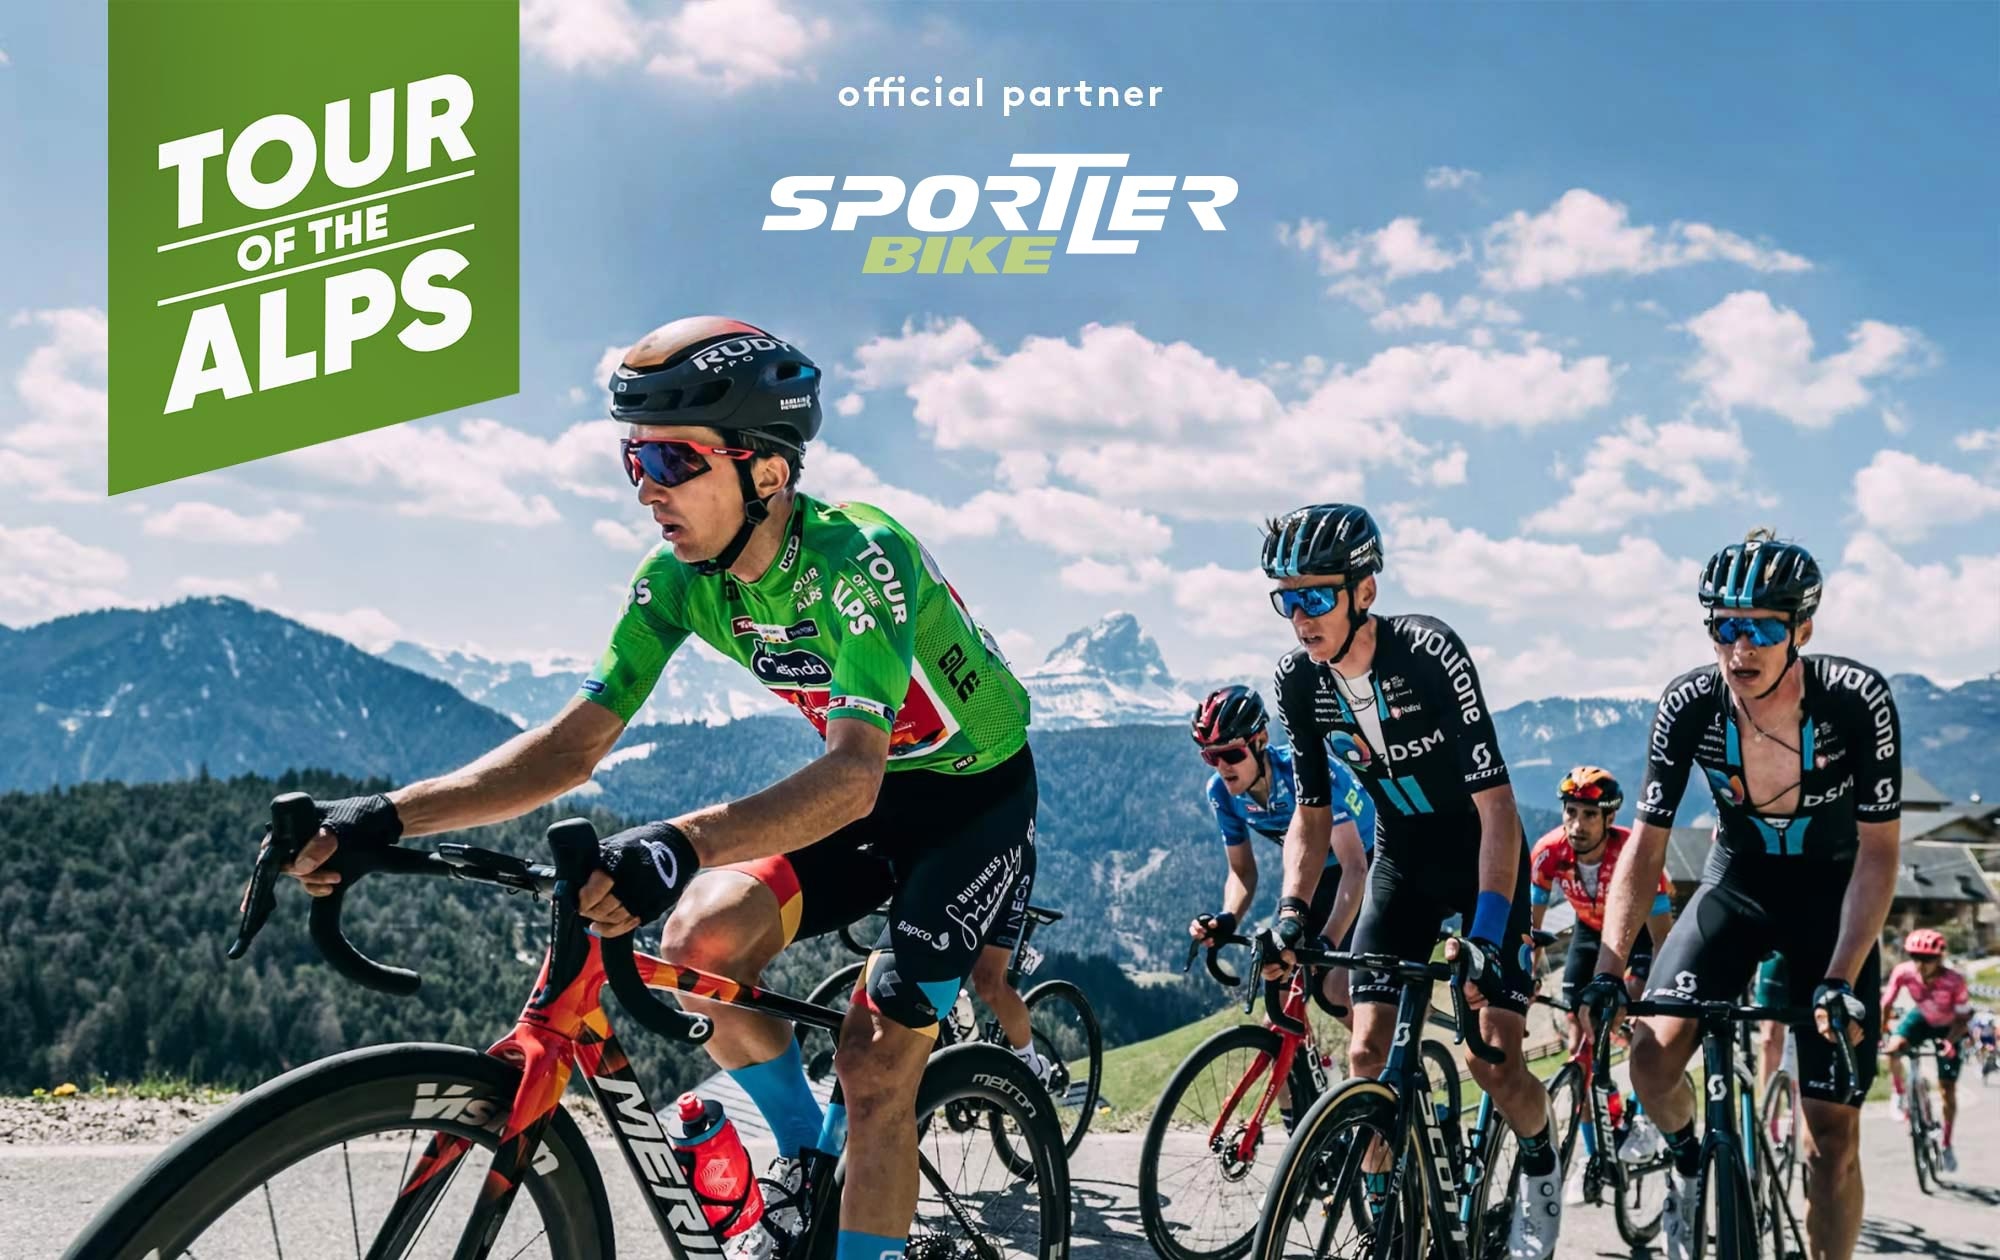 SPORTLER sponsor Tour of the Alps